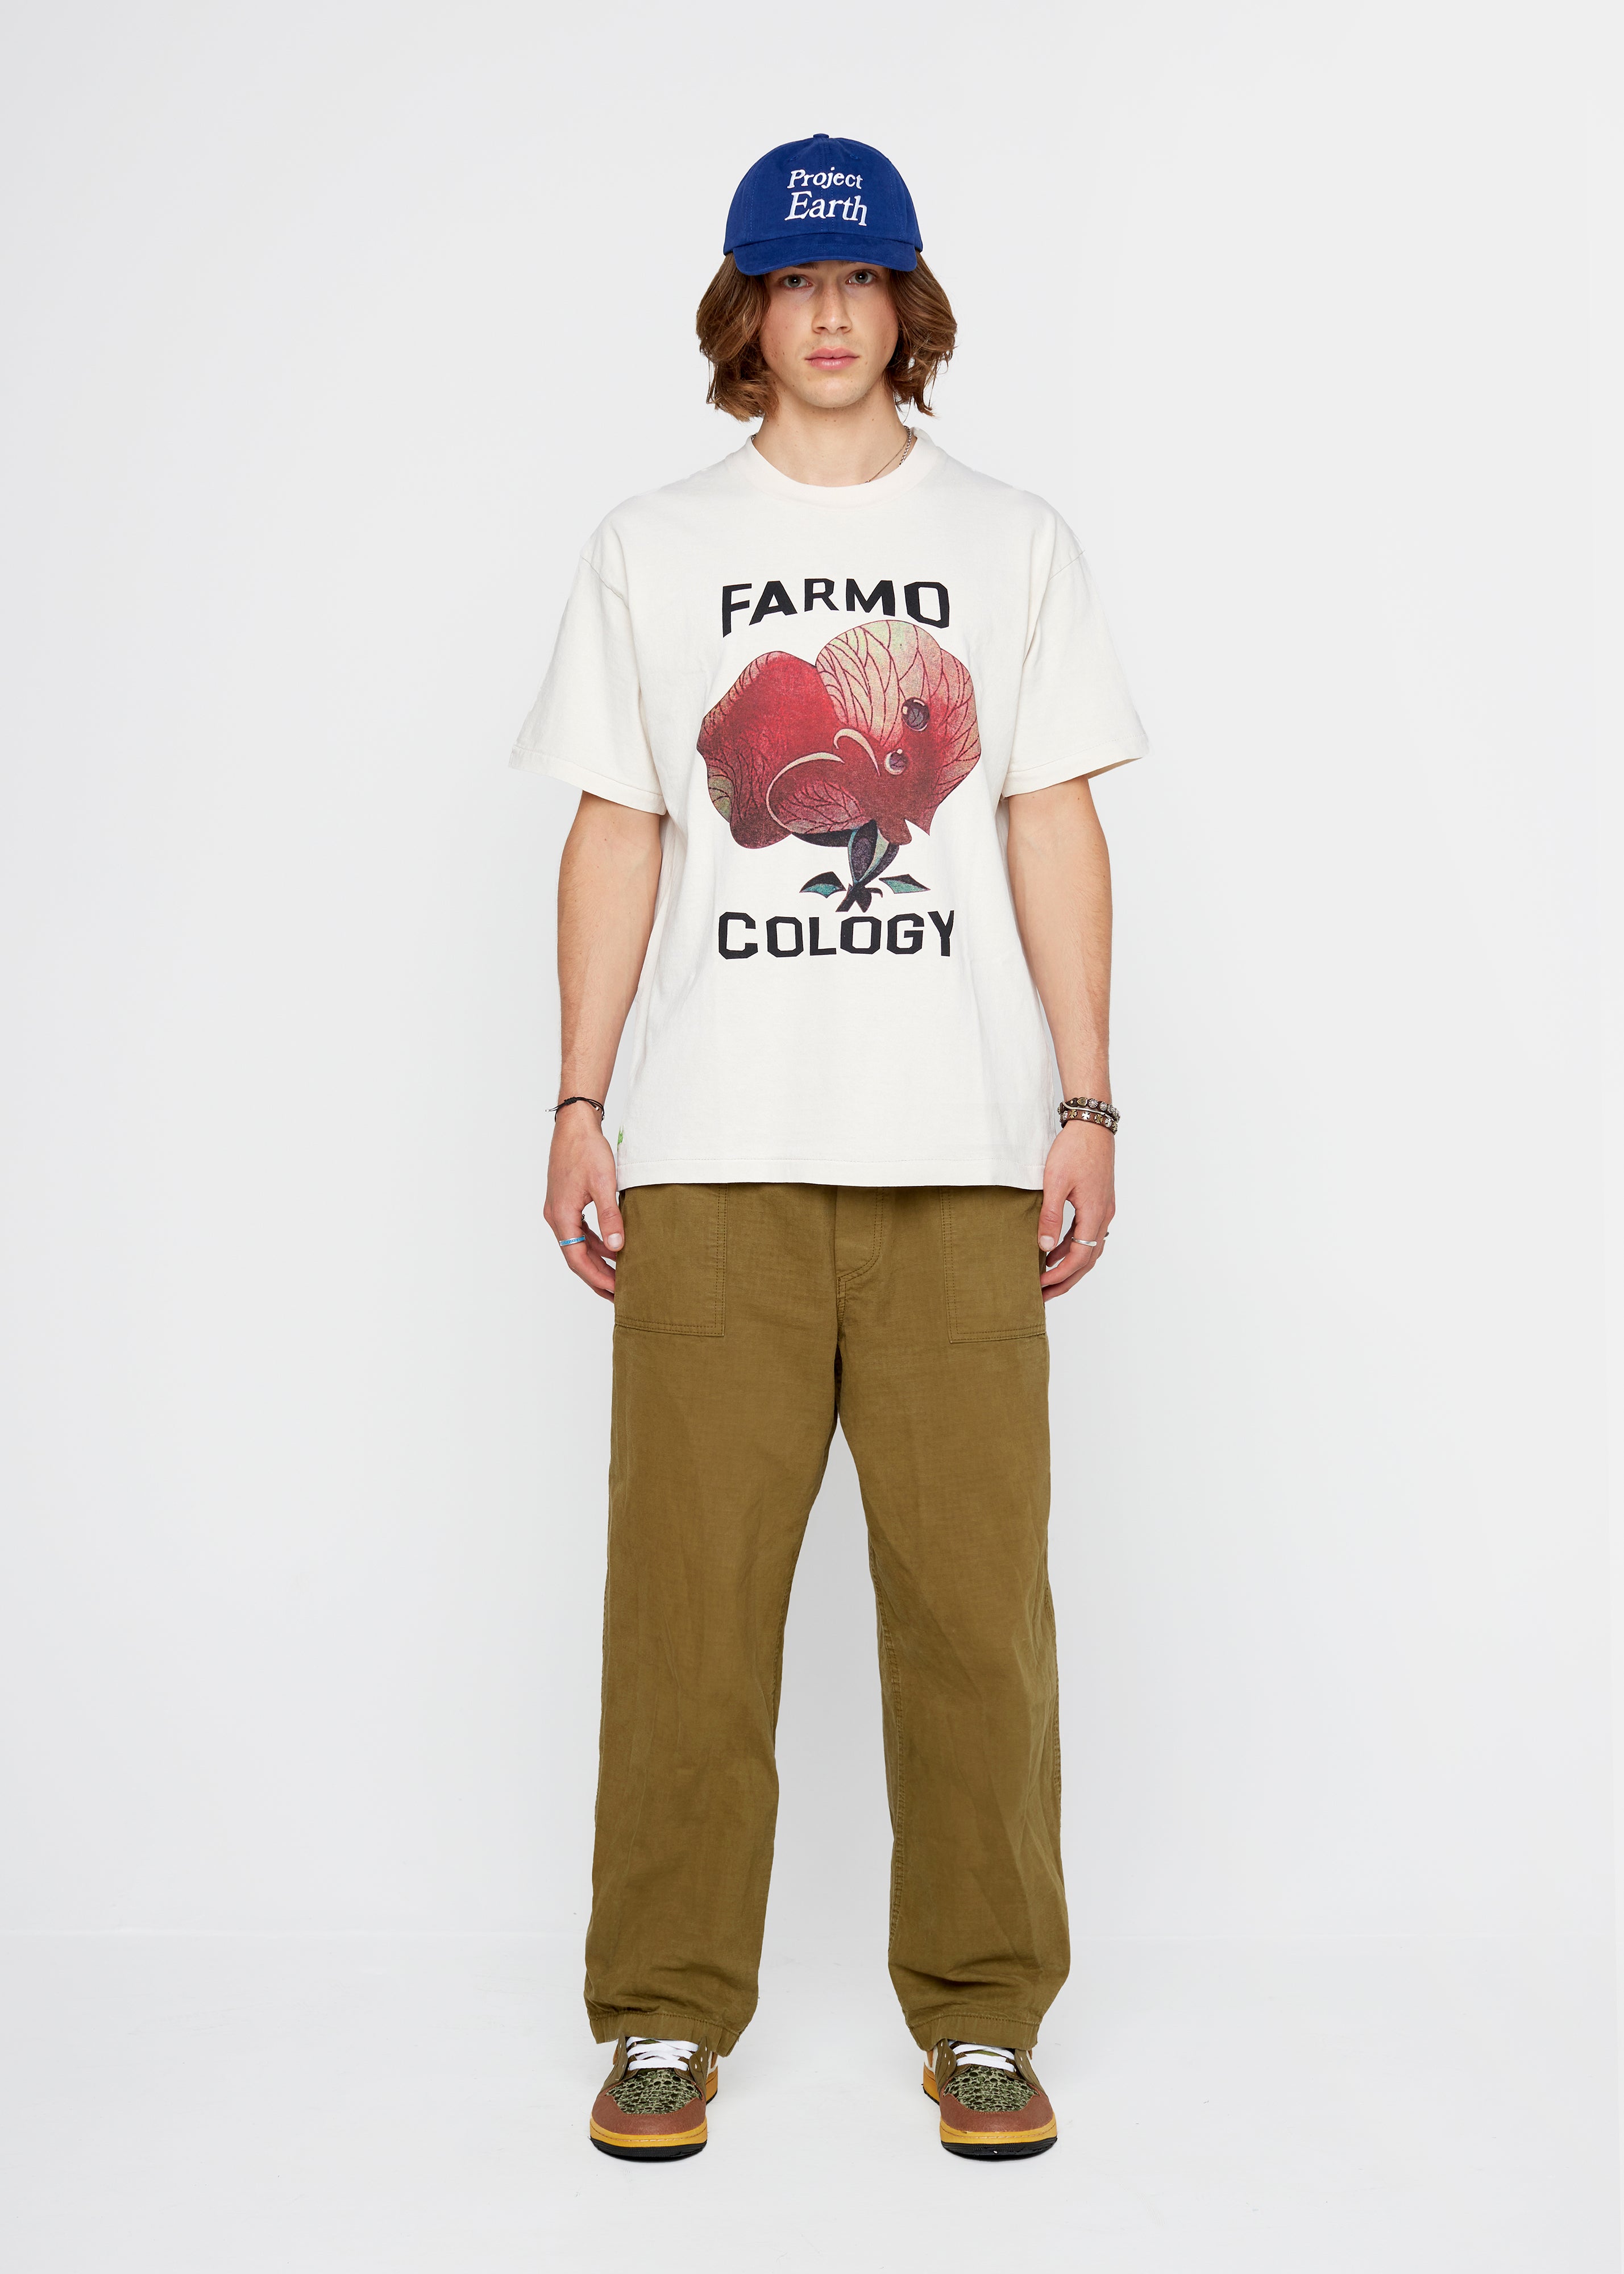 Farmo Cology Tee - Light Khaki